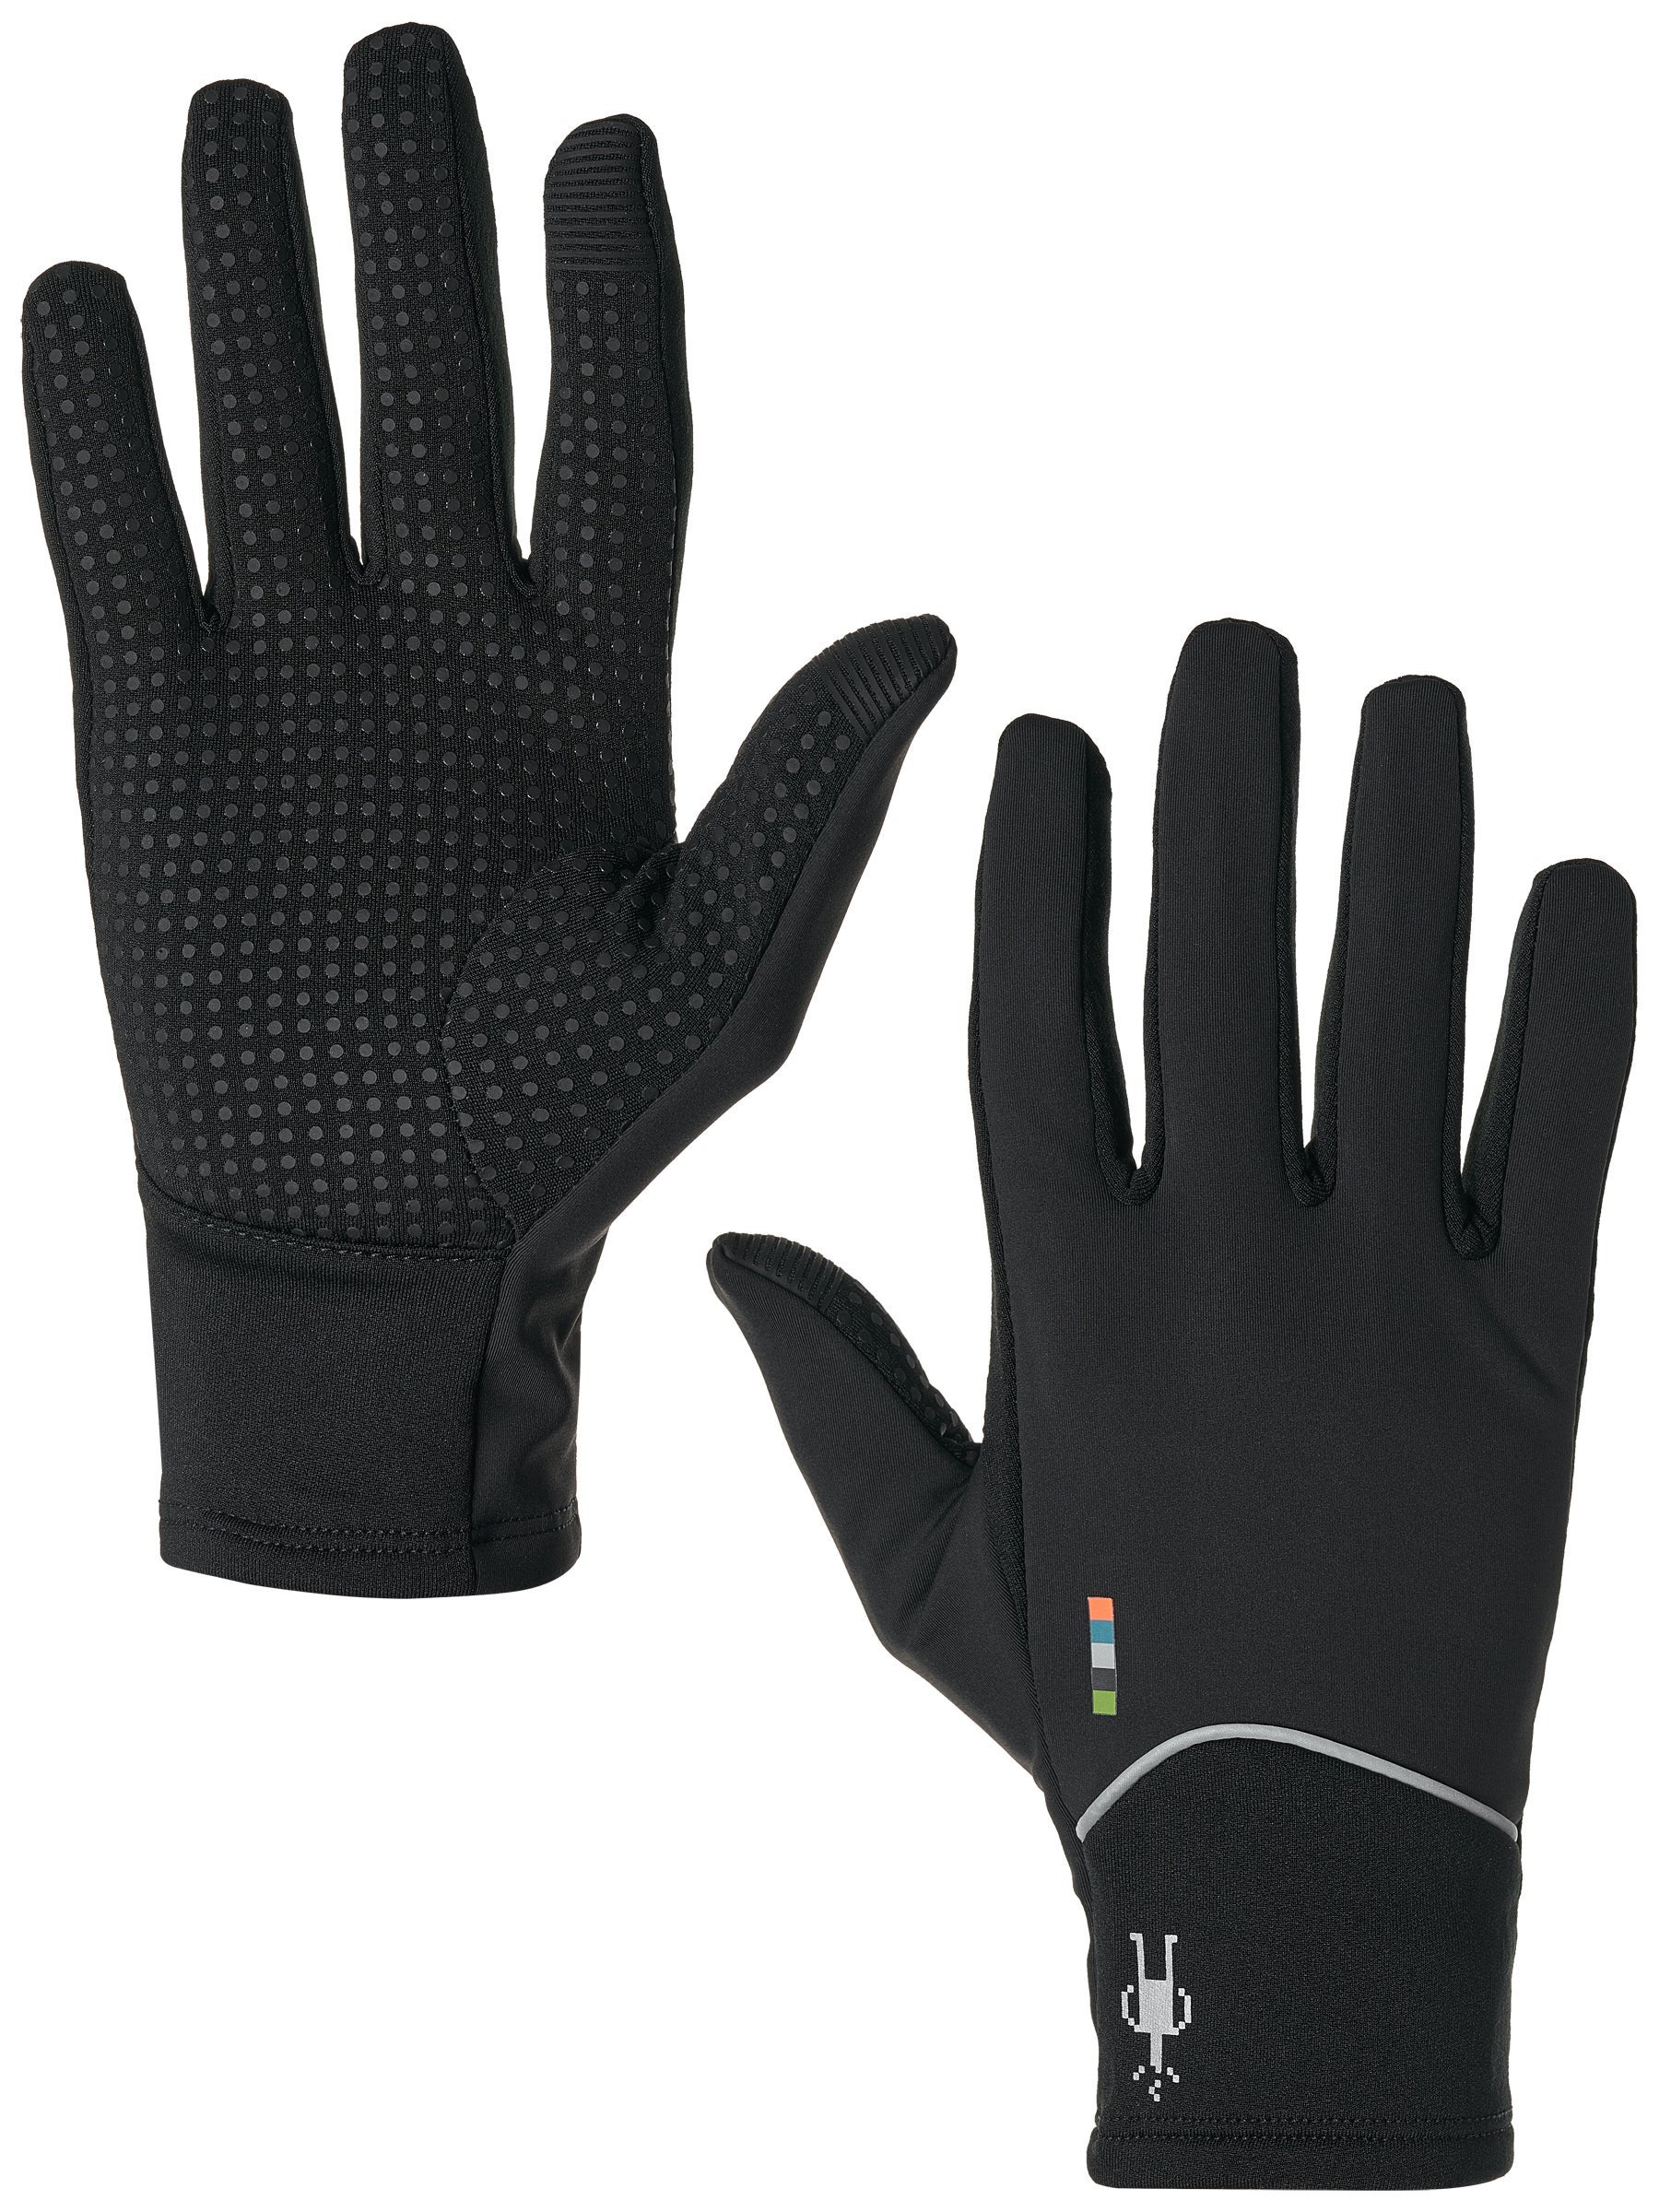 Merino Wool Fleece Glove with Finger Grips SmartWool Unisex Sport Training Glove